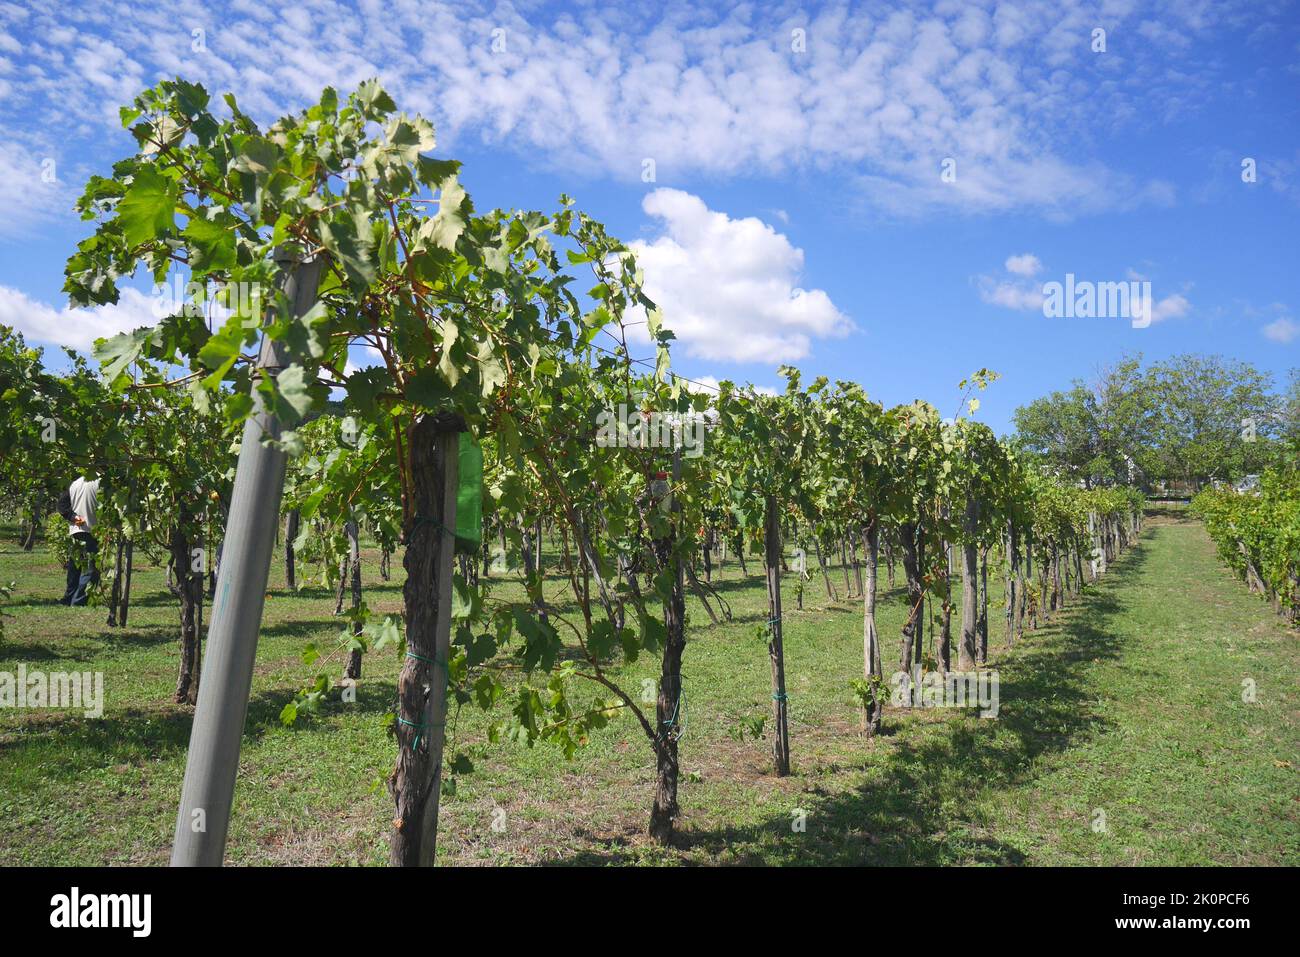 Vineyard at Lovas, Veszprem County, Hungary Stock Photo